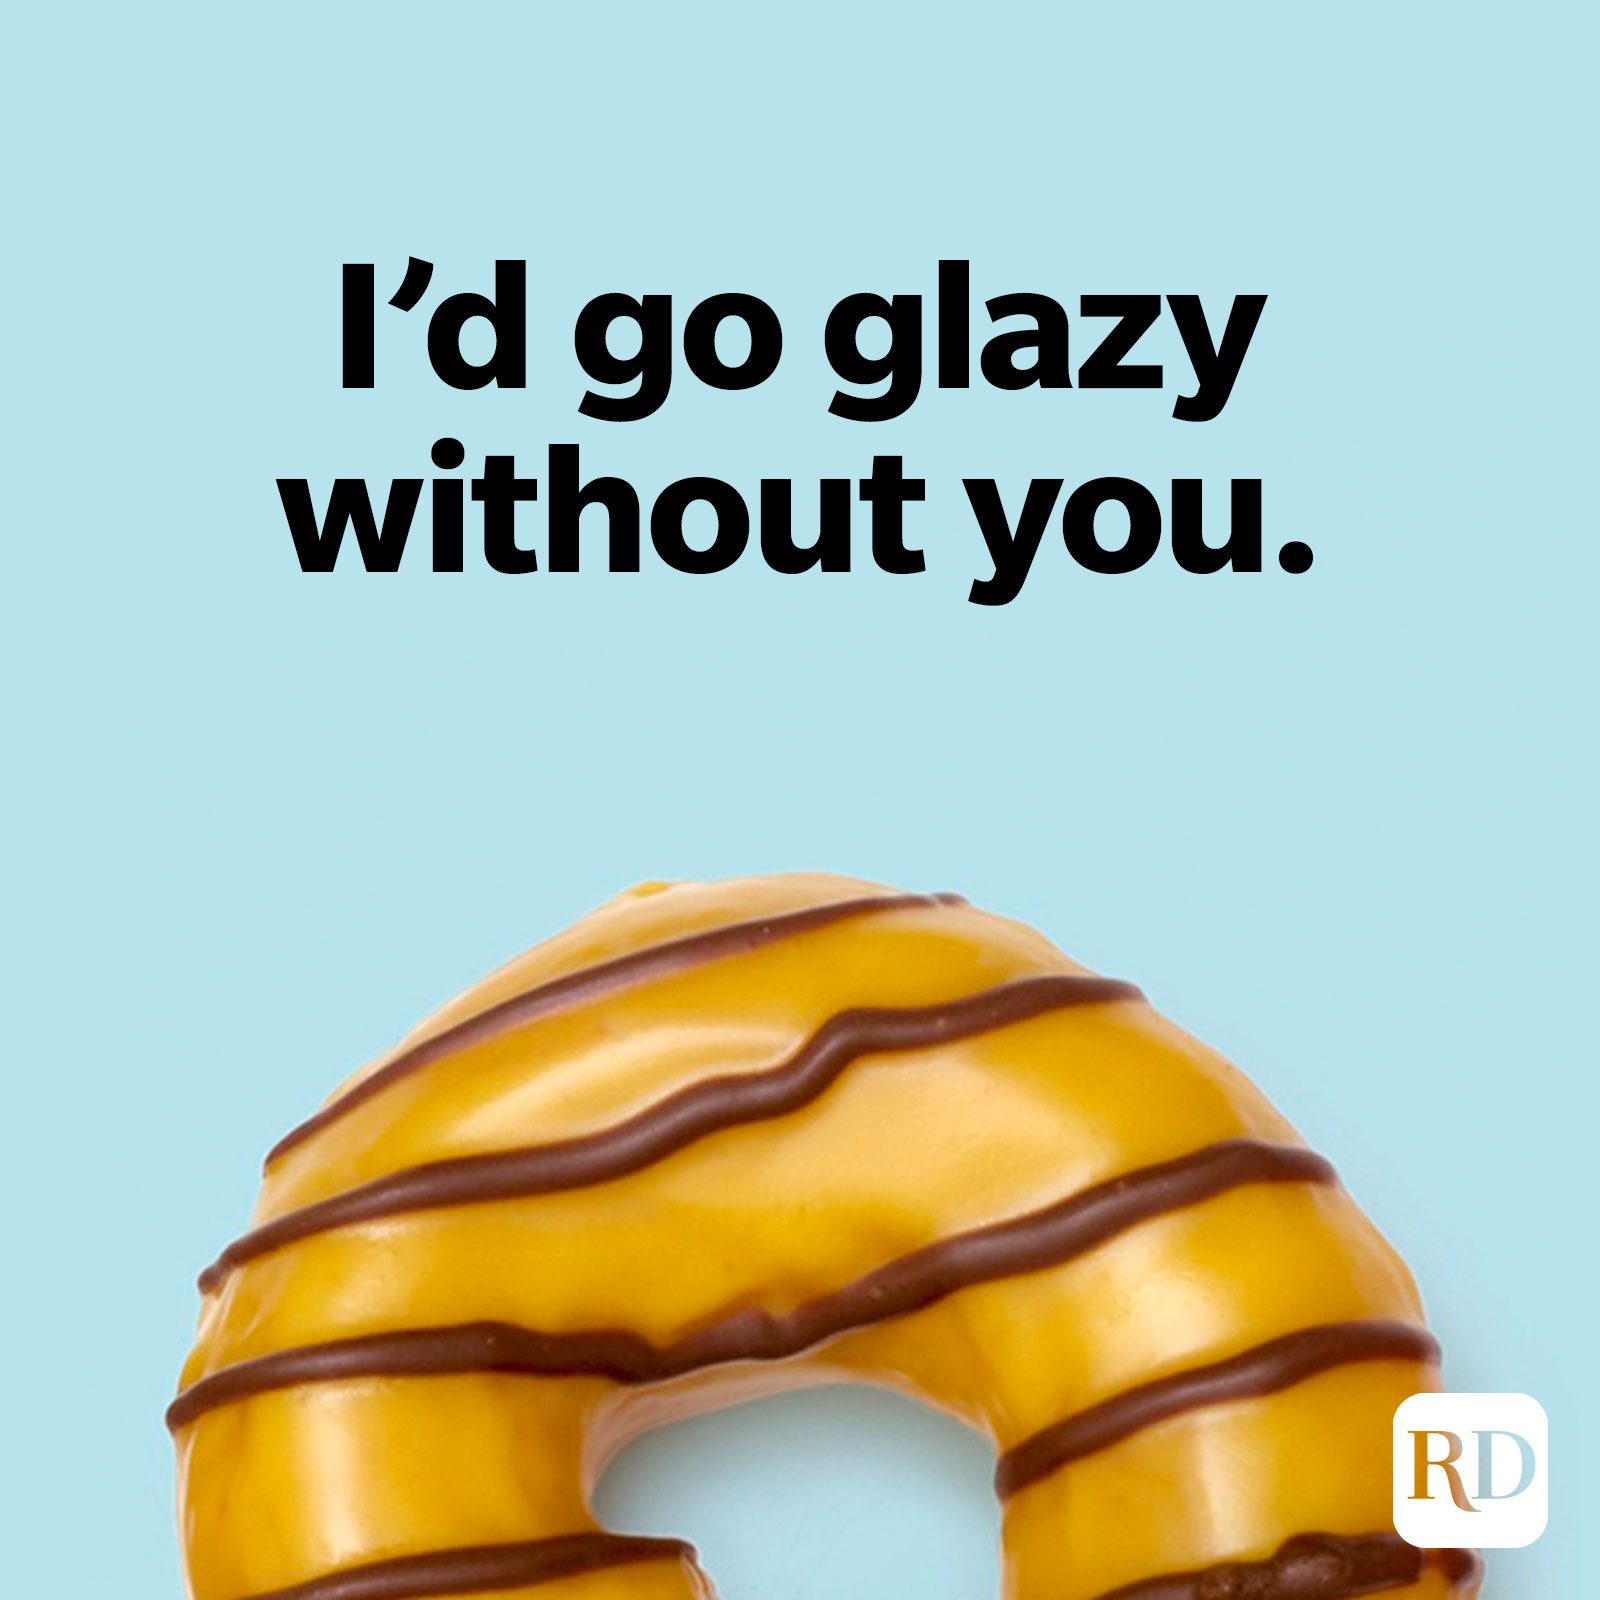 I'd go glazy without you.